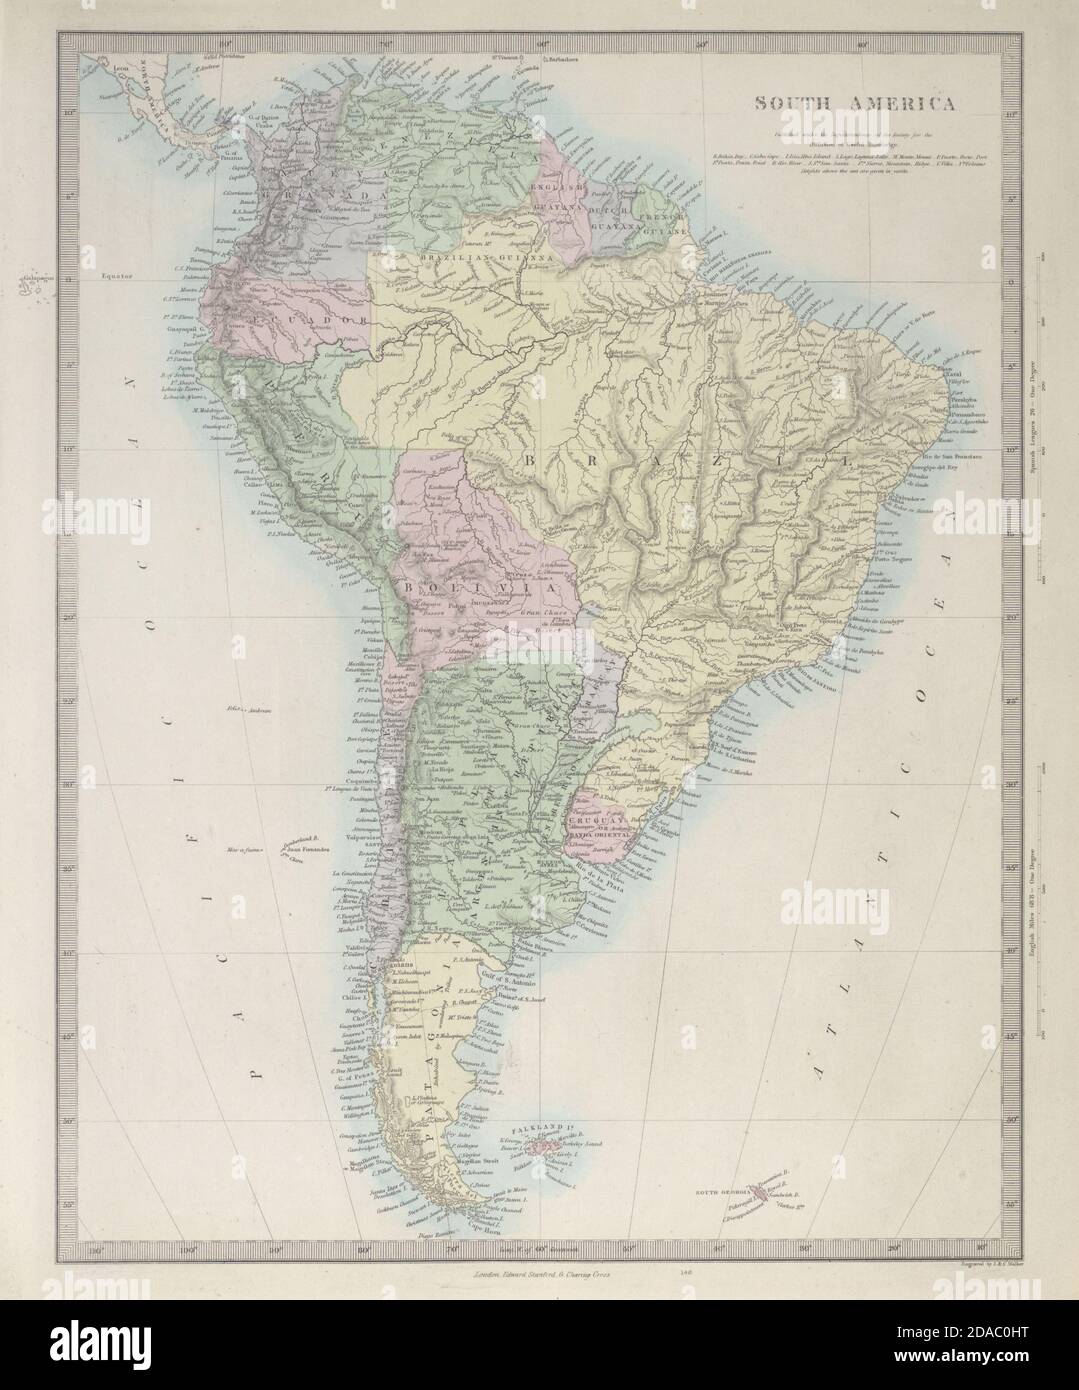 SOUTH AMERICA. Brazil Peru Bolivia w/Litoral Patagonia La Plata. SDUK 1857  map Stock Photo - Alamy